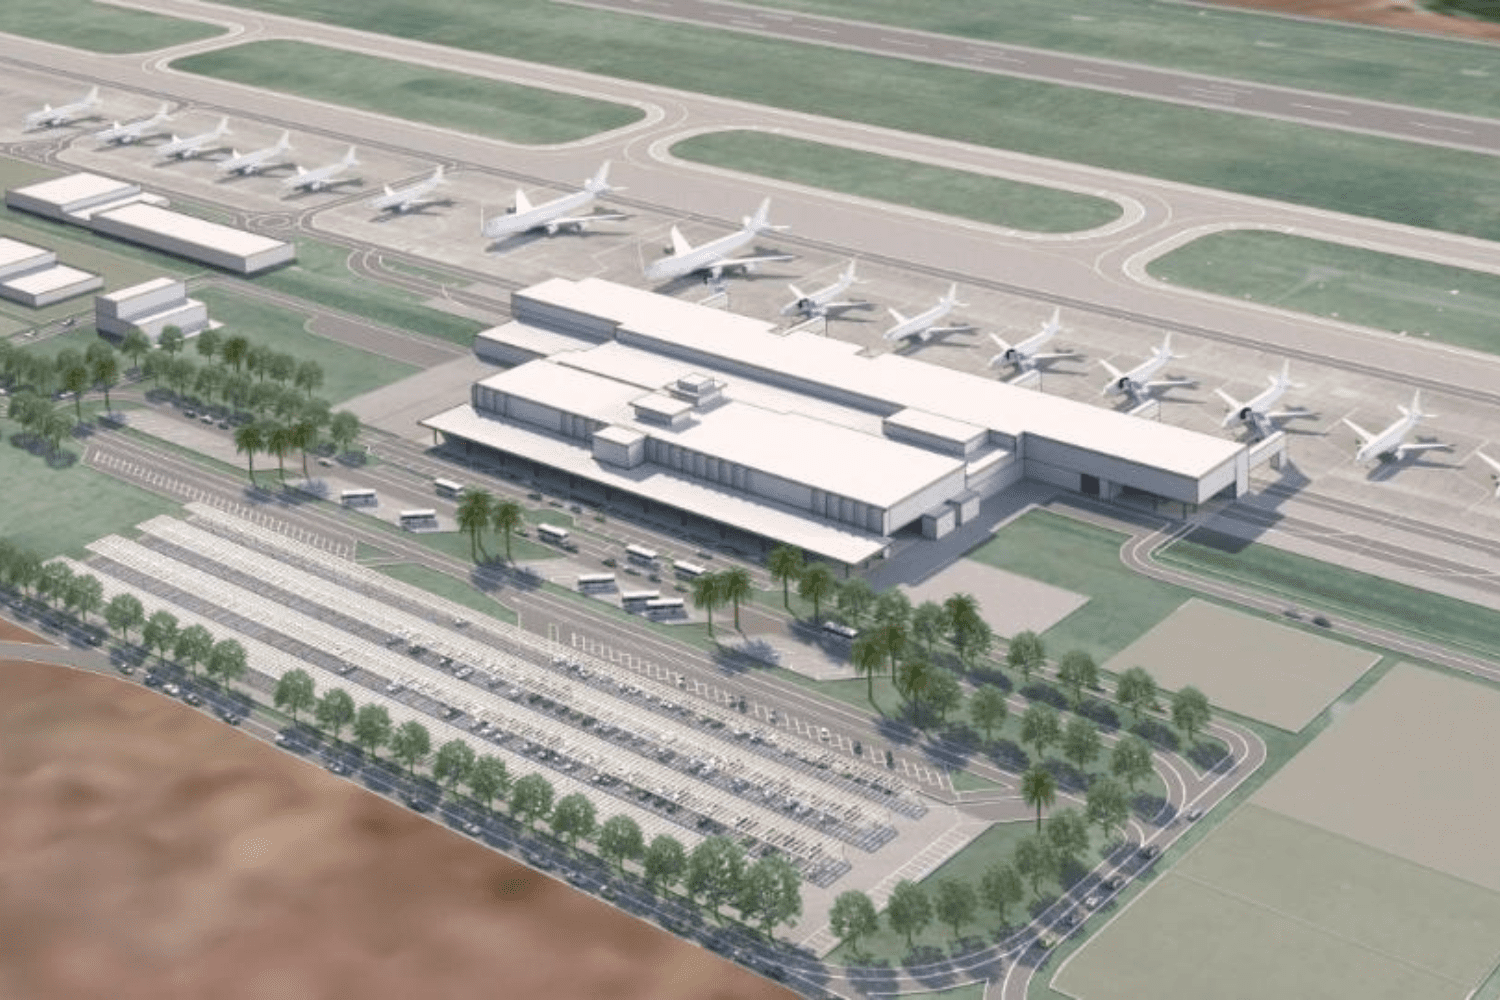 Porto Seguro terá um novo aeroporto: o Aeroporto Internacional Costa do Descobrimento